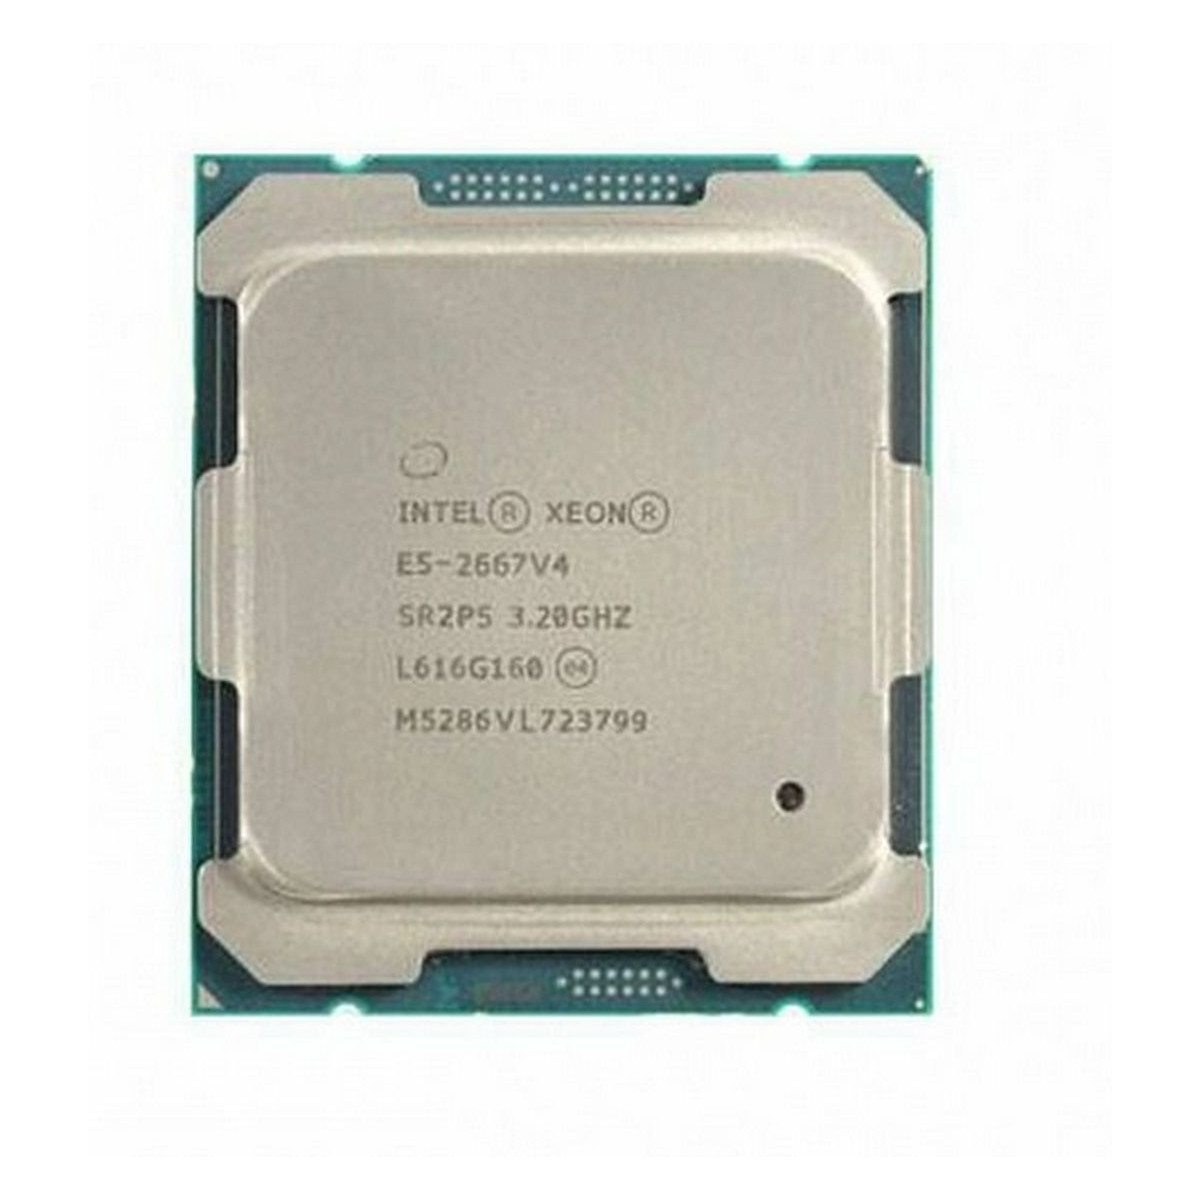 INTEL XEON E5-2667 v4 8x 3.20Ghz LGA2011-3 SR2P5